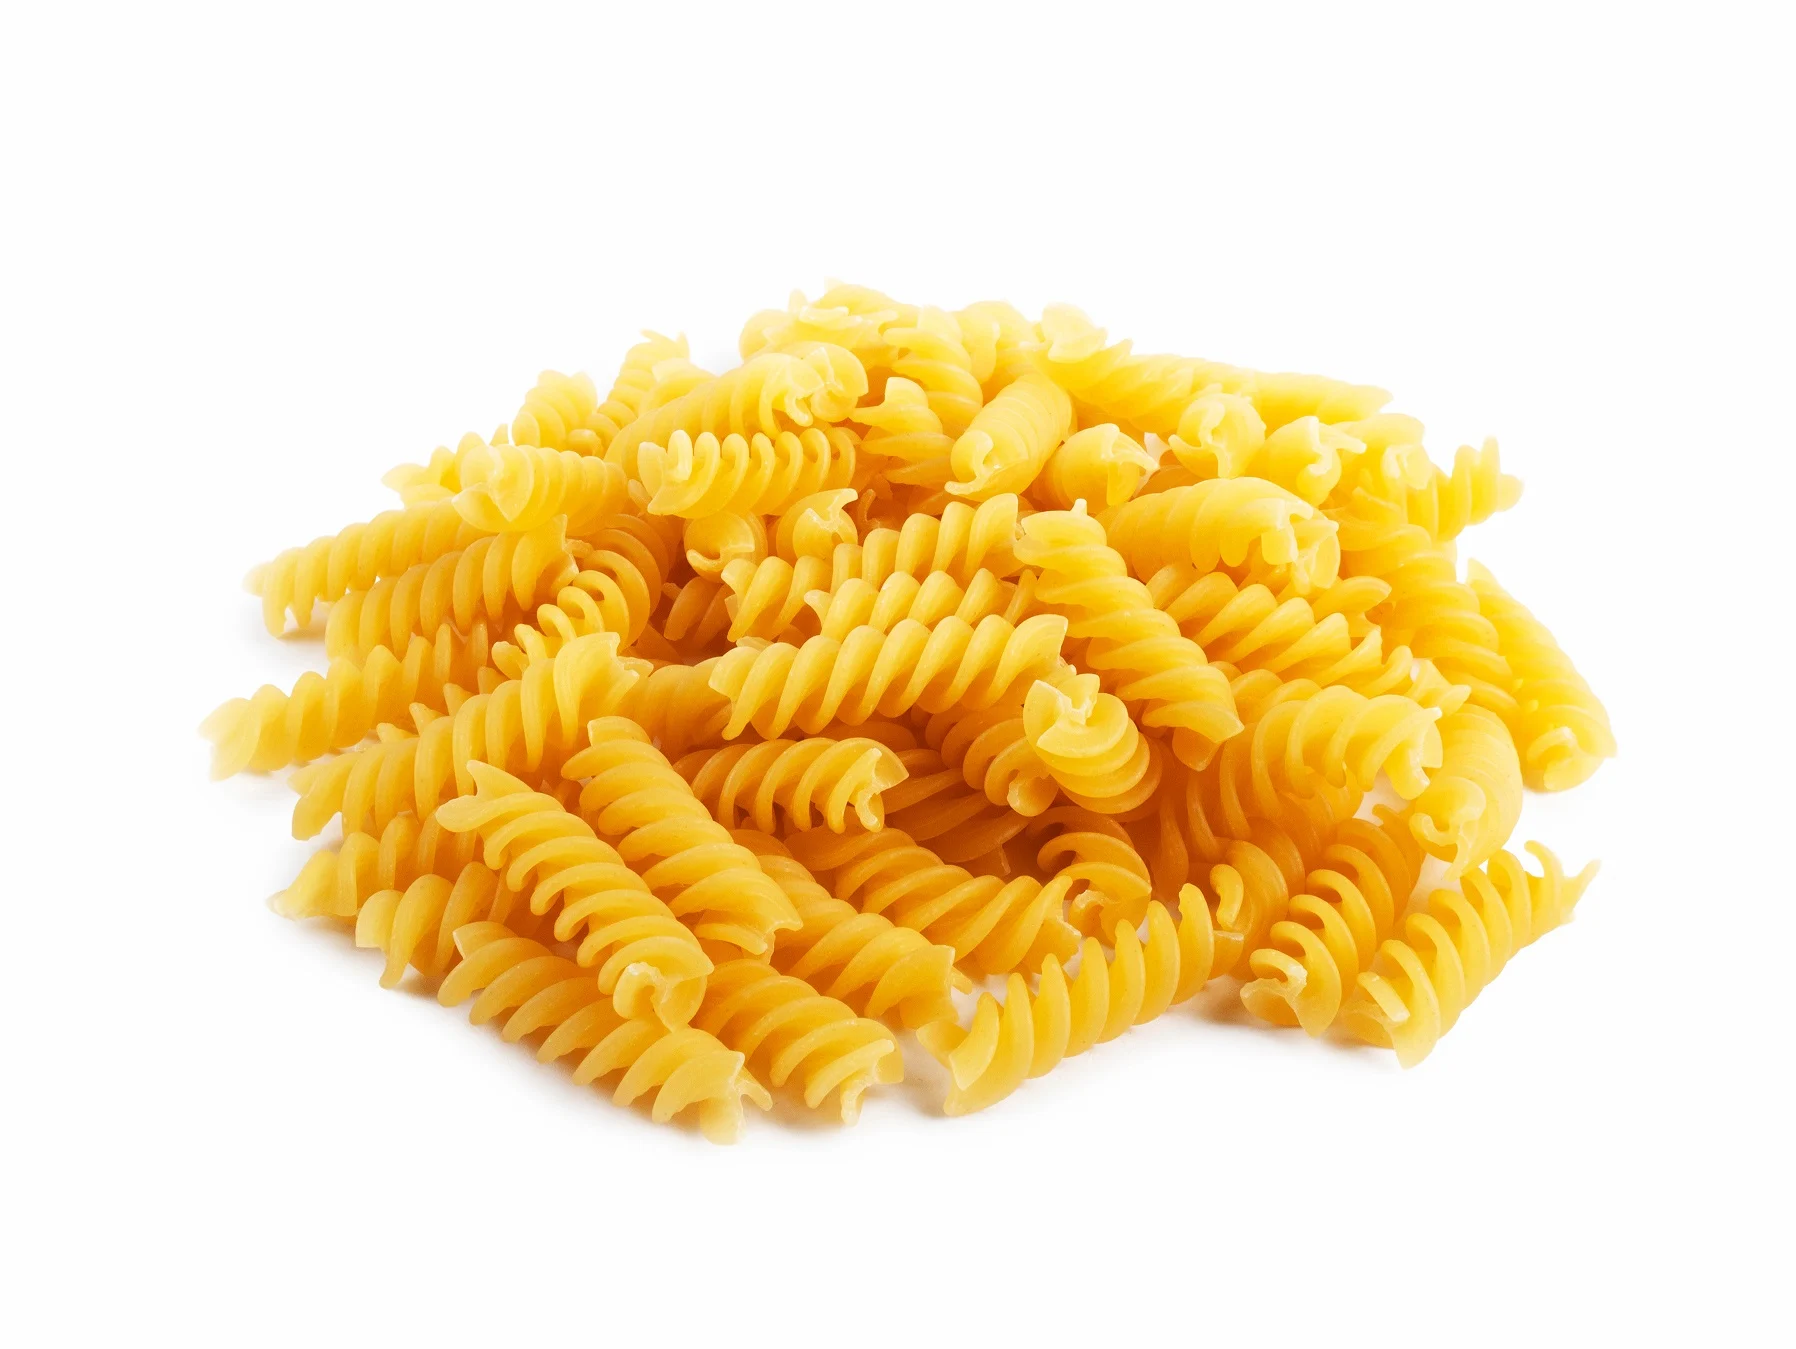 Pile,of,fusilli,pasta,isolated,on,white,background